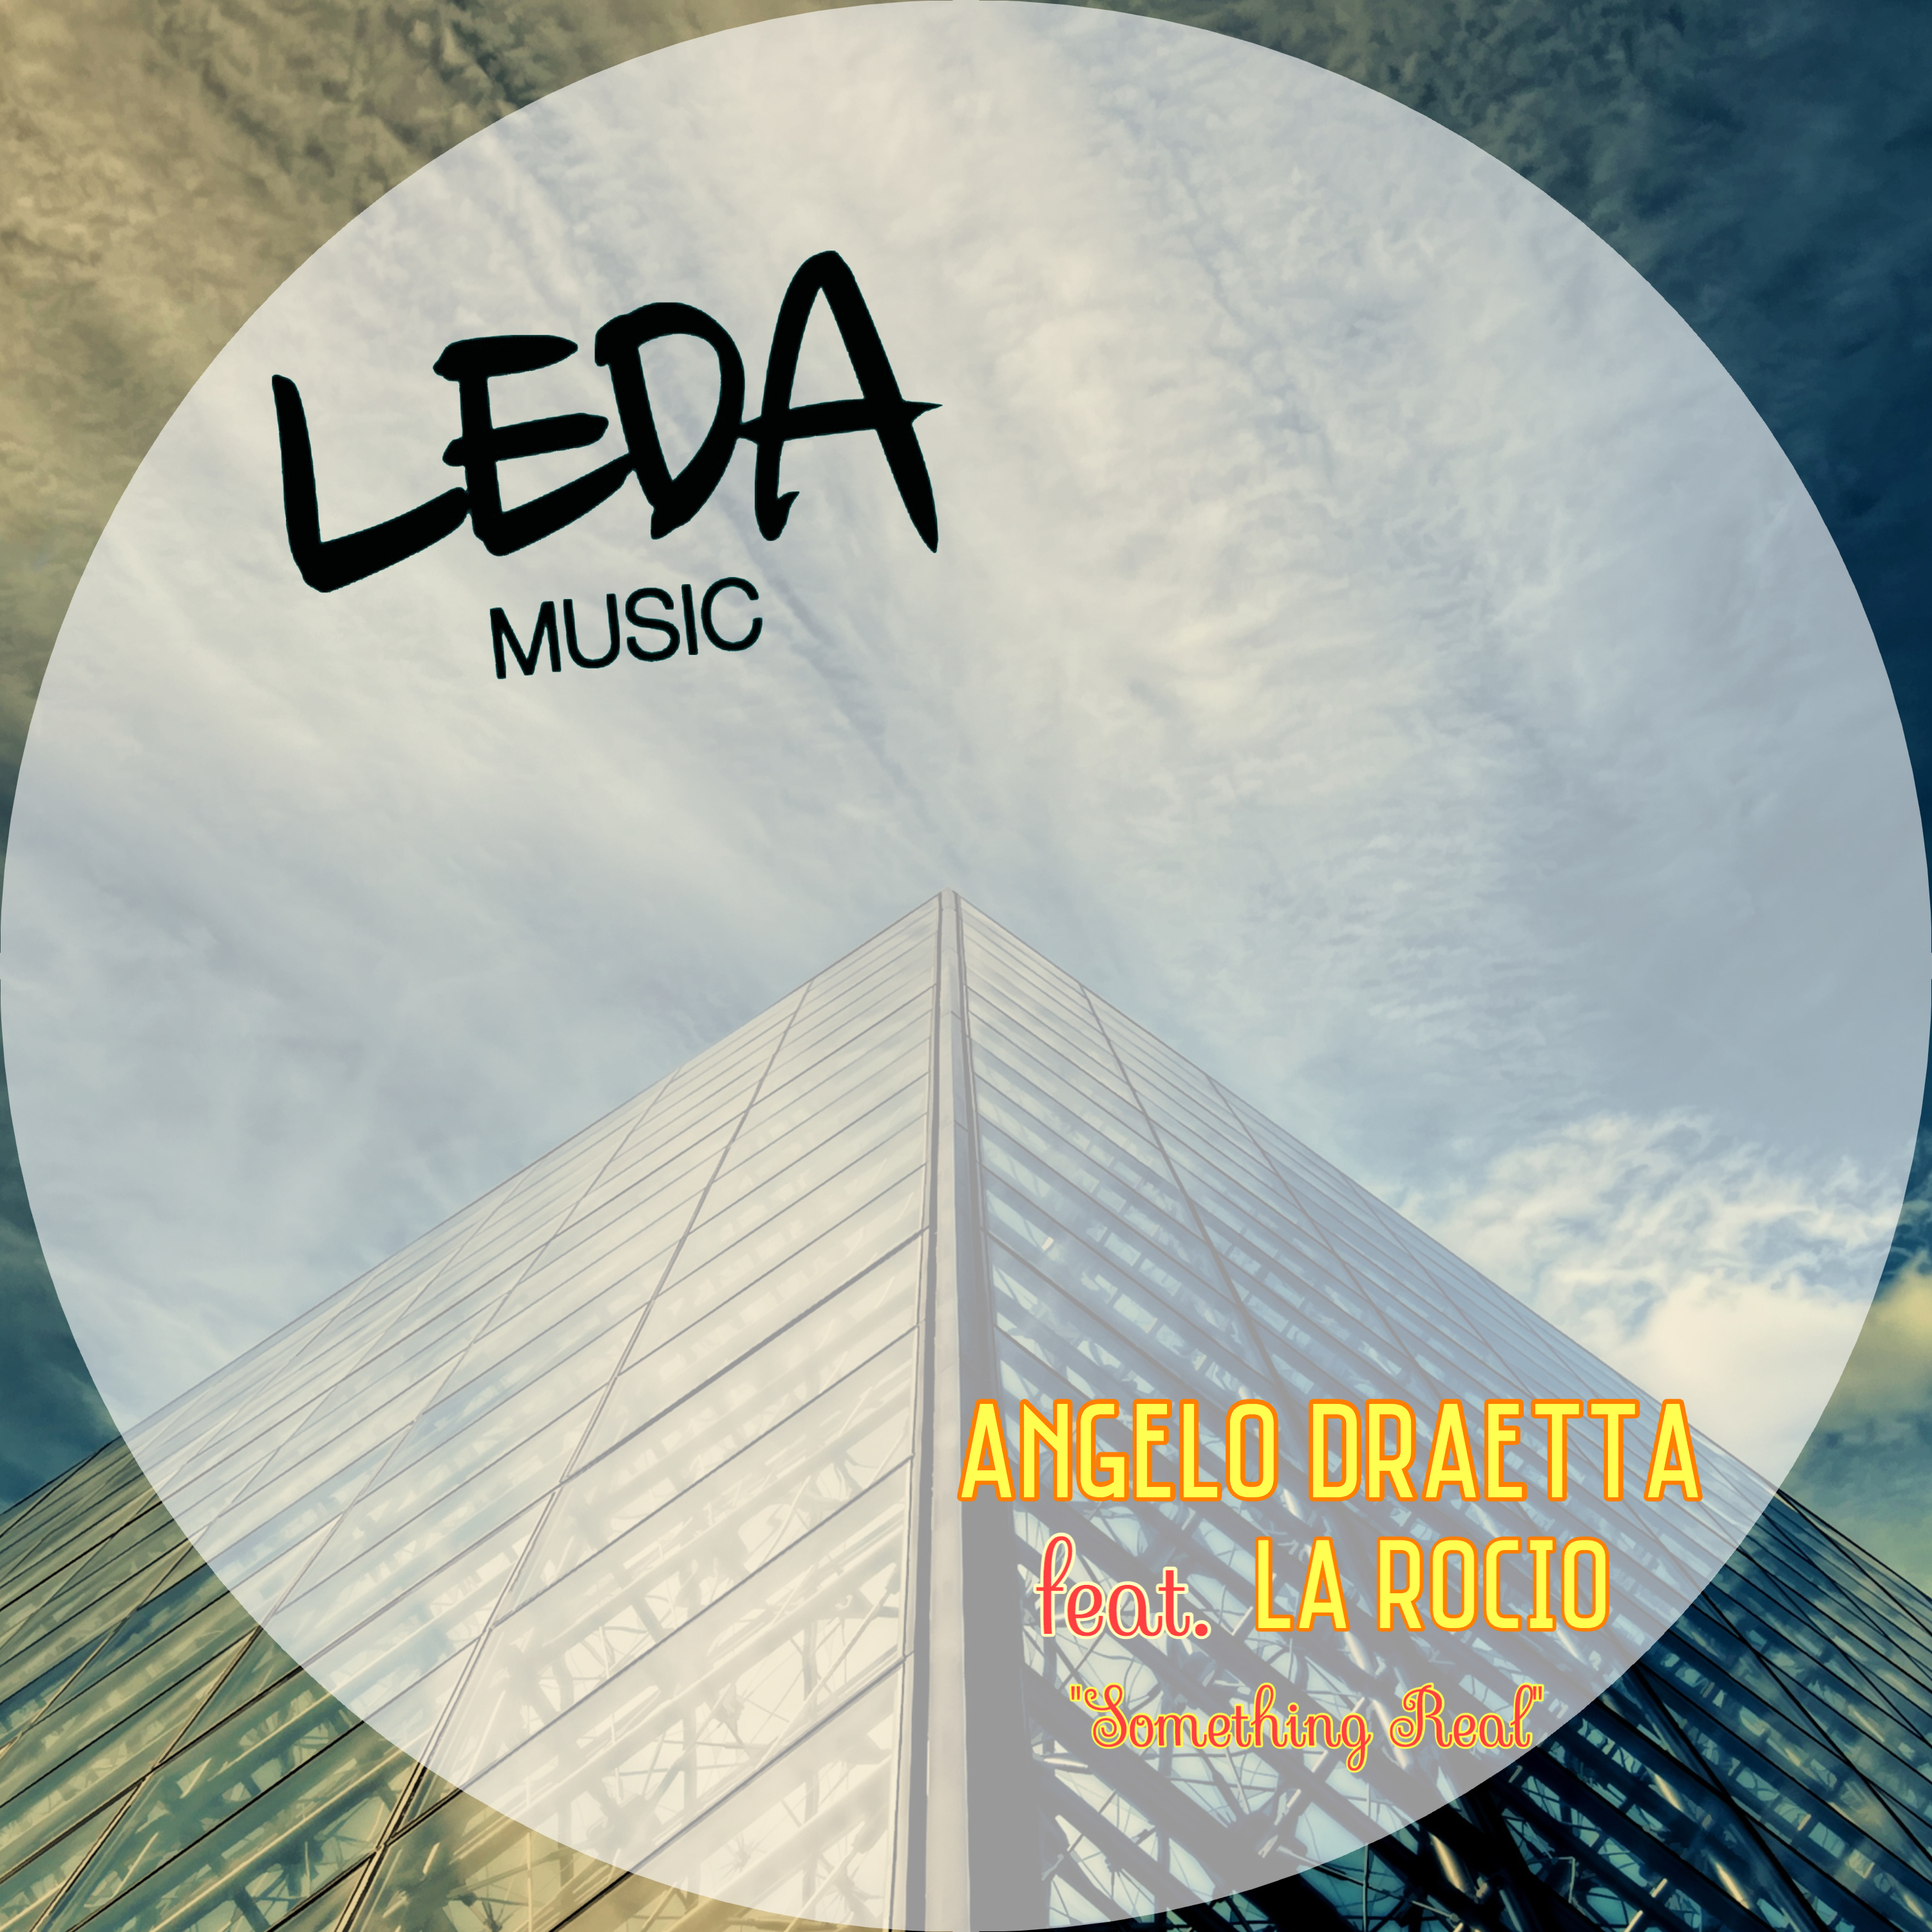 Angelo Draetta ft La Rocio - Something Real / Leda Music